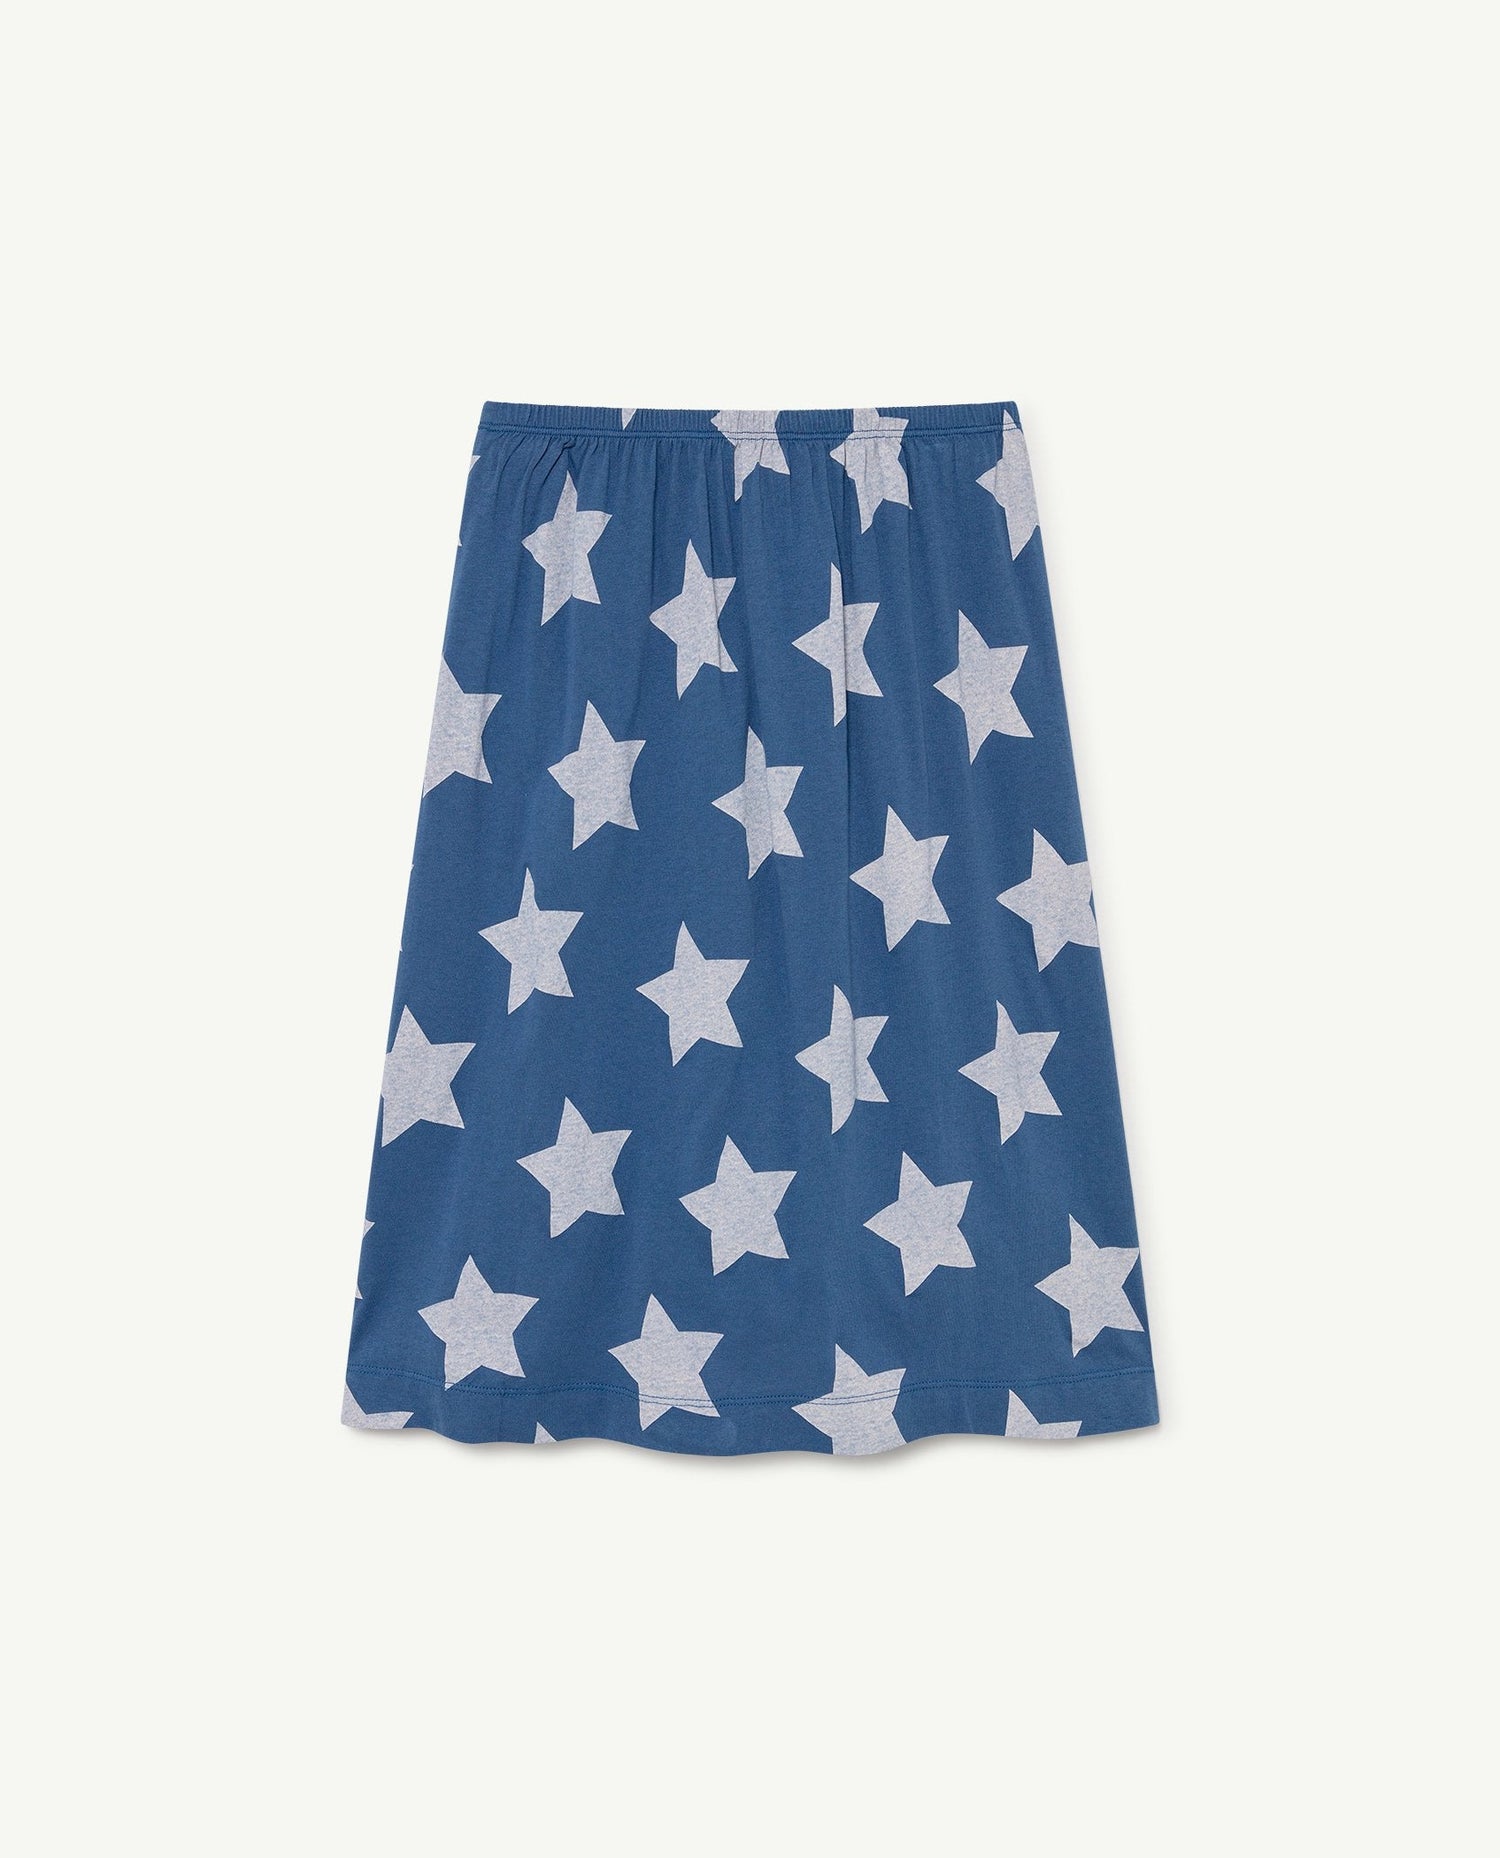 Ladybug skirt Blue Stars Skirts The Animals Observatory 